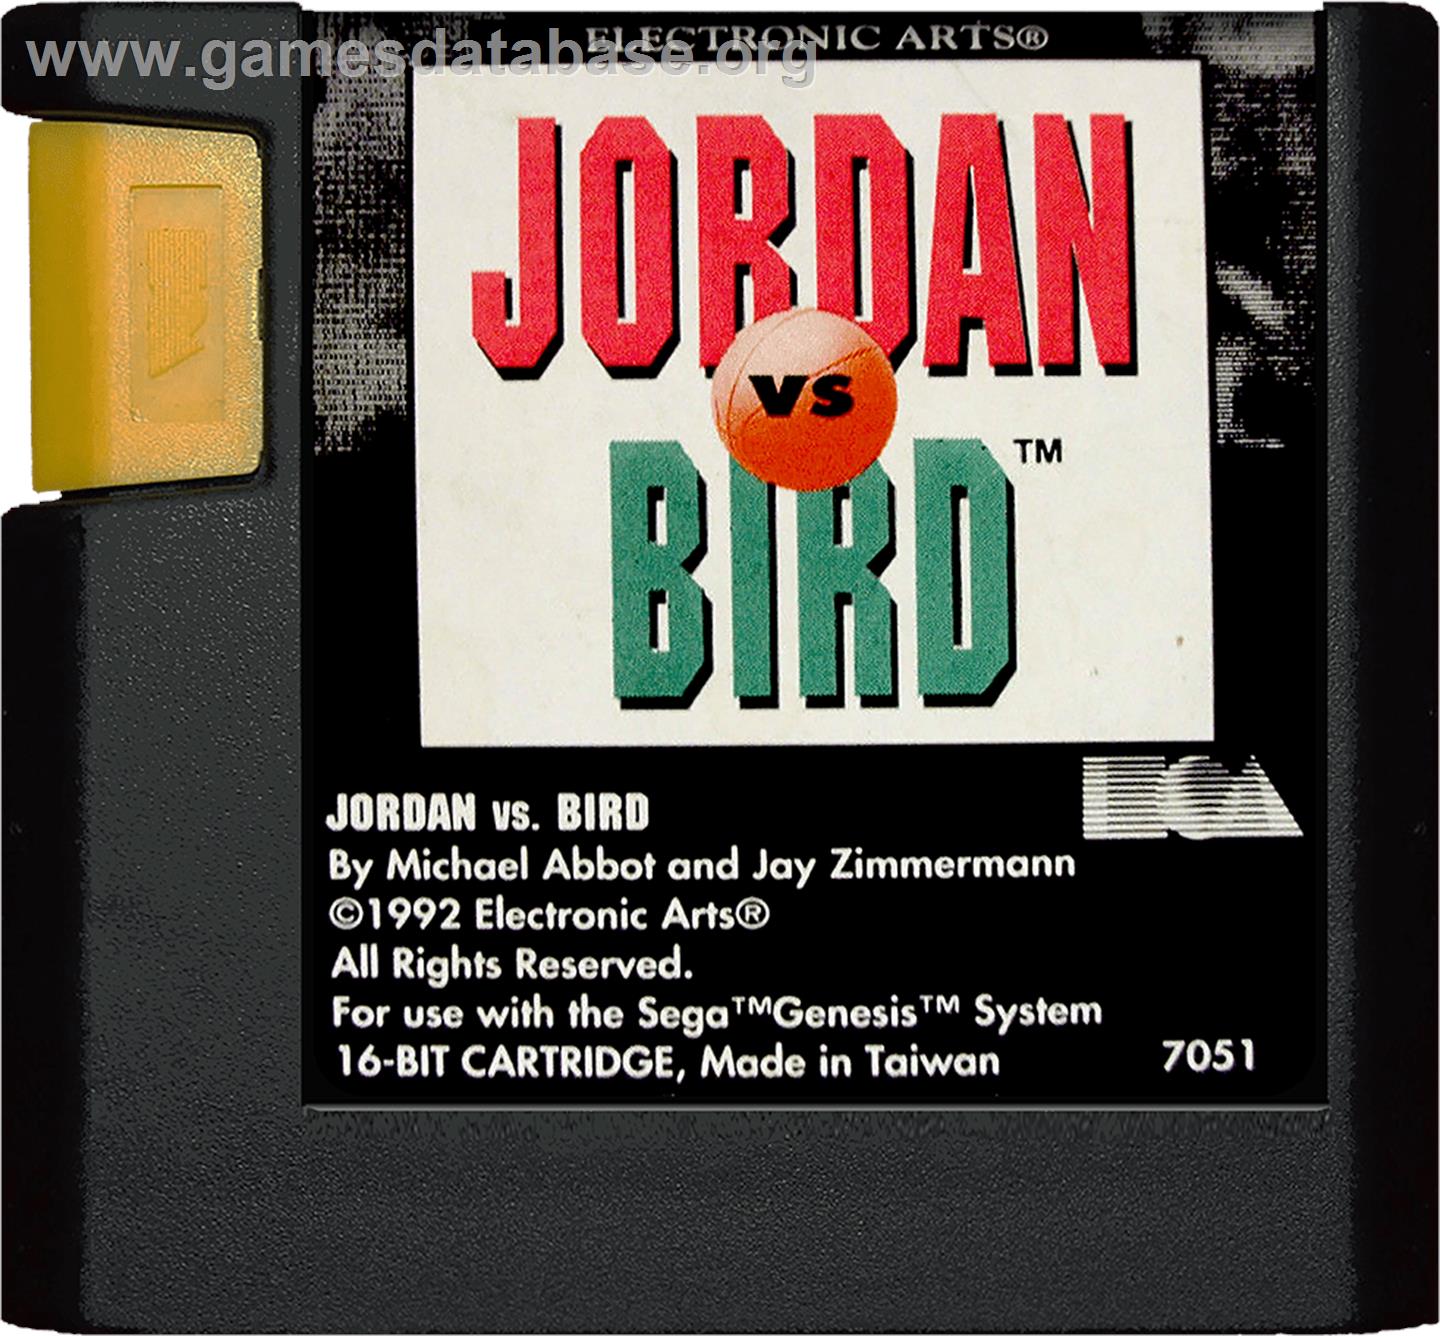 Jordan vs. Bird: One-on-One - Sega Genesis - Artwork - Cartridge